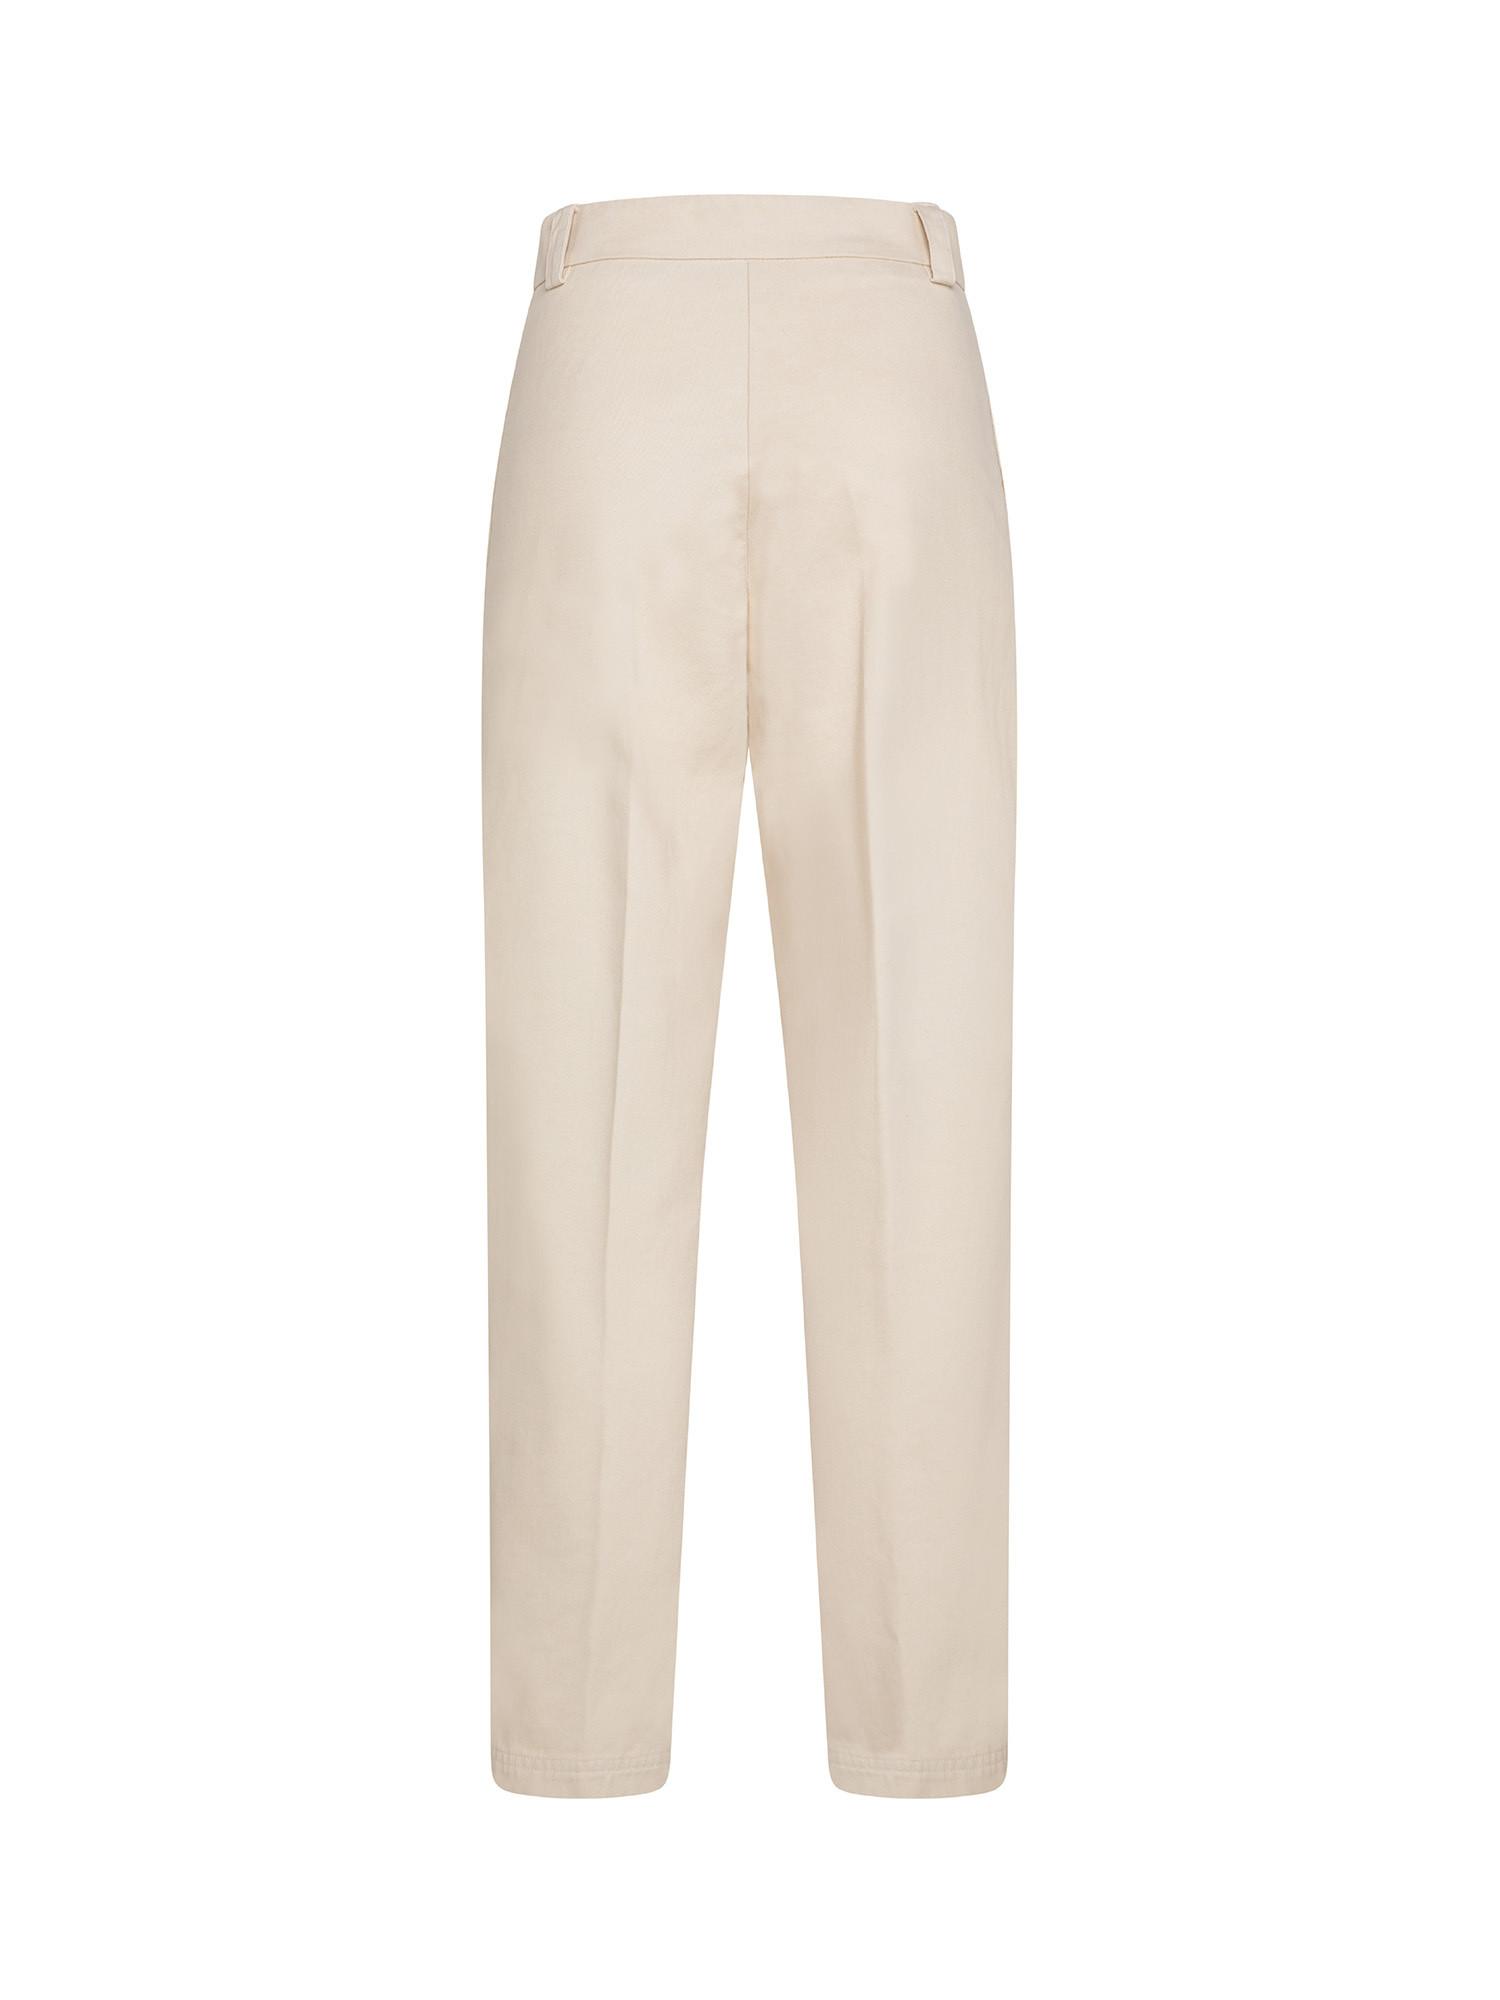 Pantalone regular fit, Grigio, large image number 1